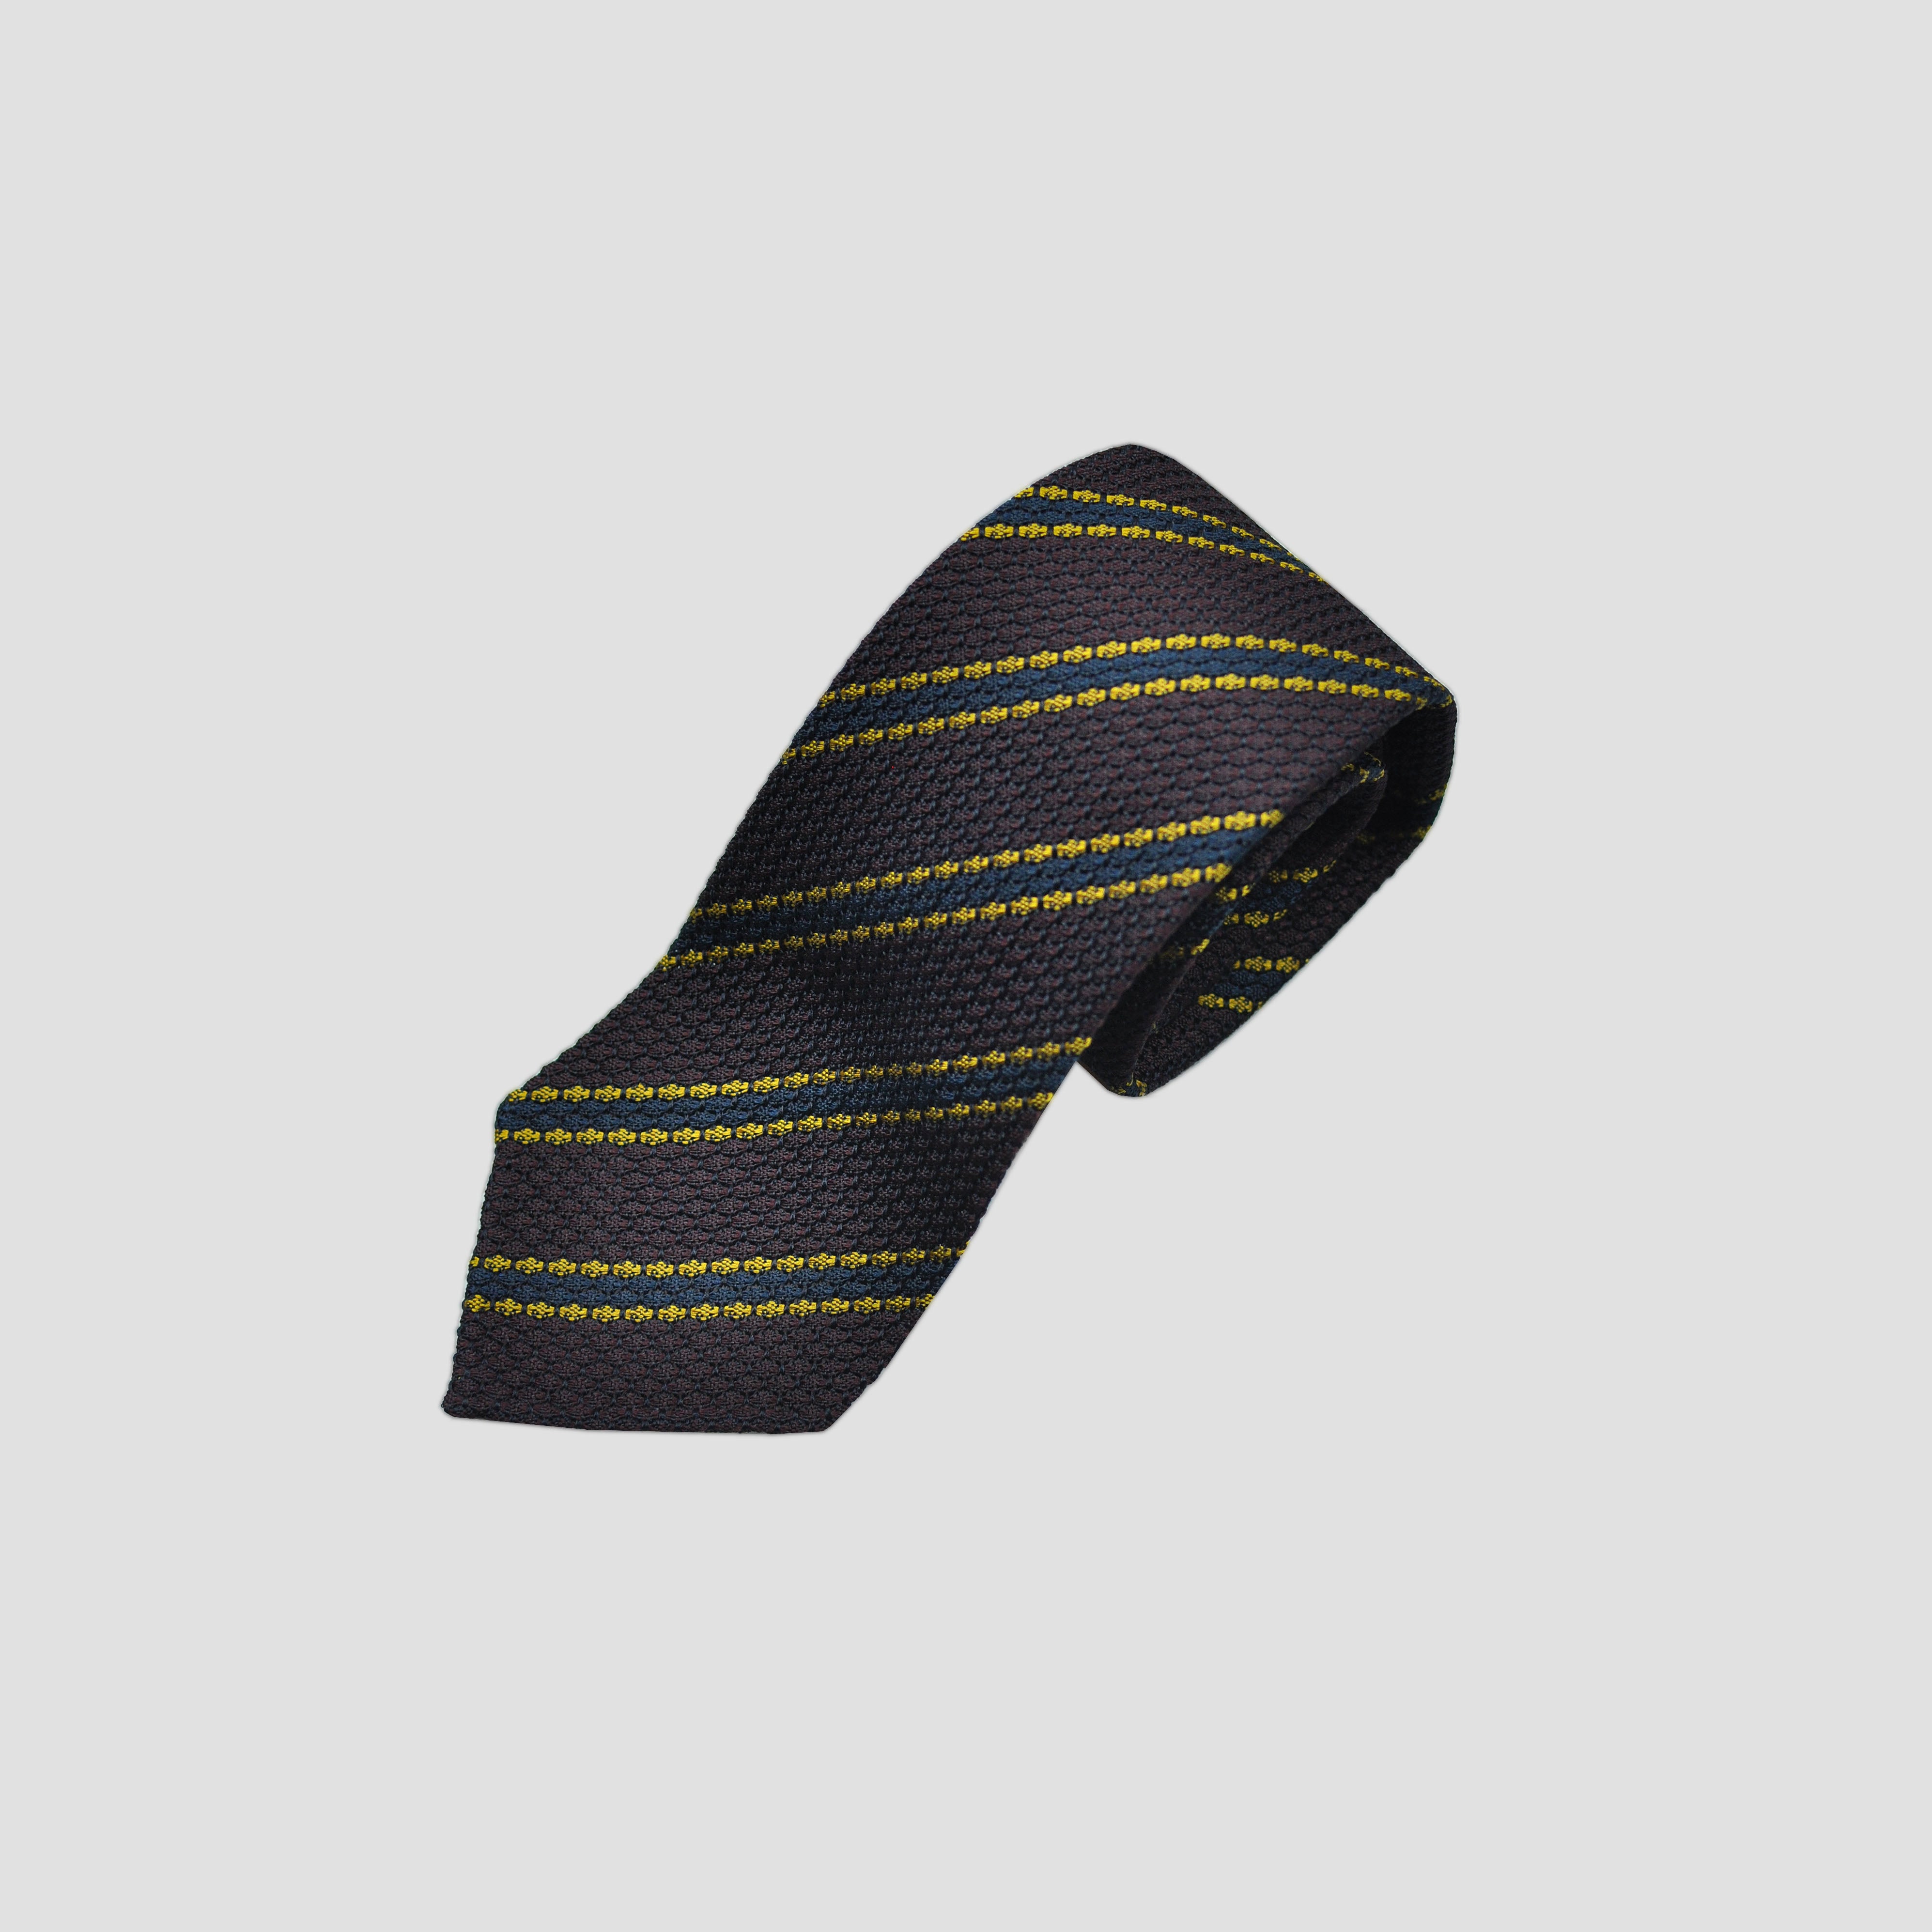 Neat Stripes Handrolled Grenadine Silk Tie in Brown, Blue & Yellow